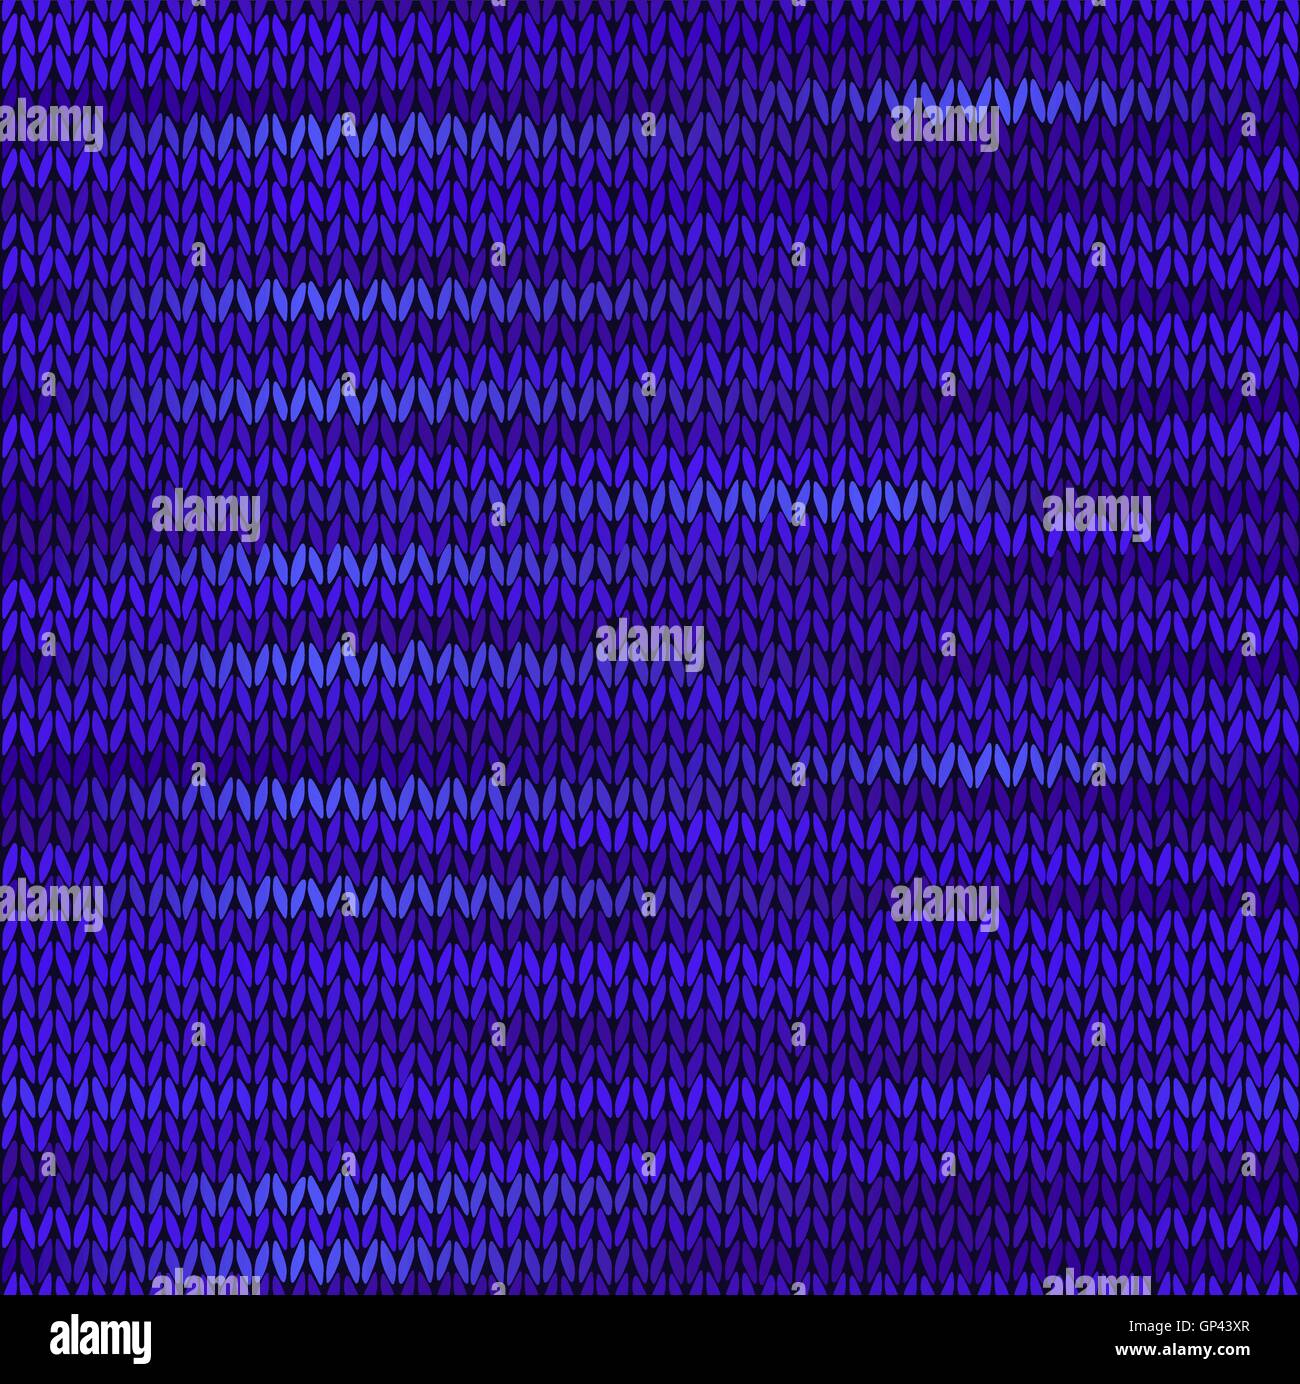 Seamless Knitted Melange Pattern. Blue Violet Color Vector Illus Stock Vector